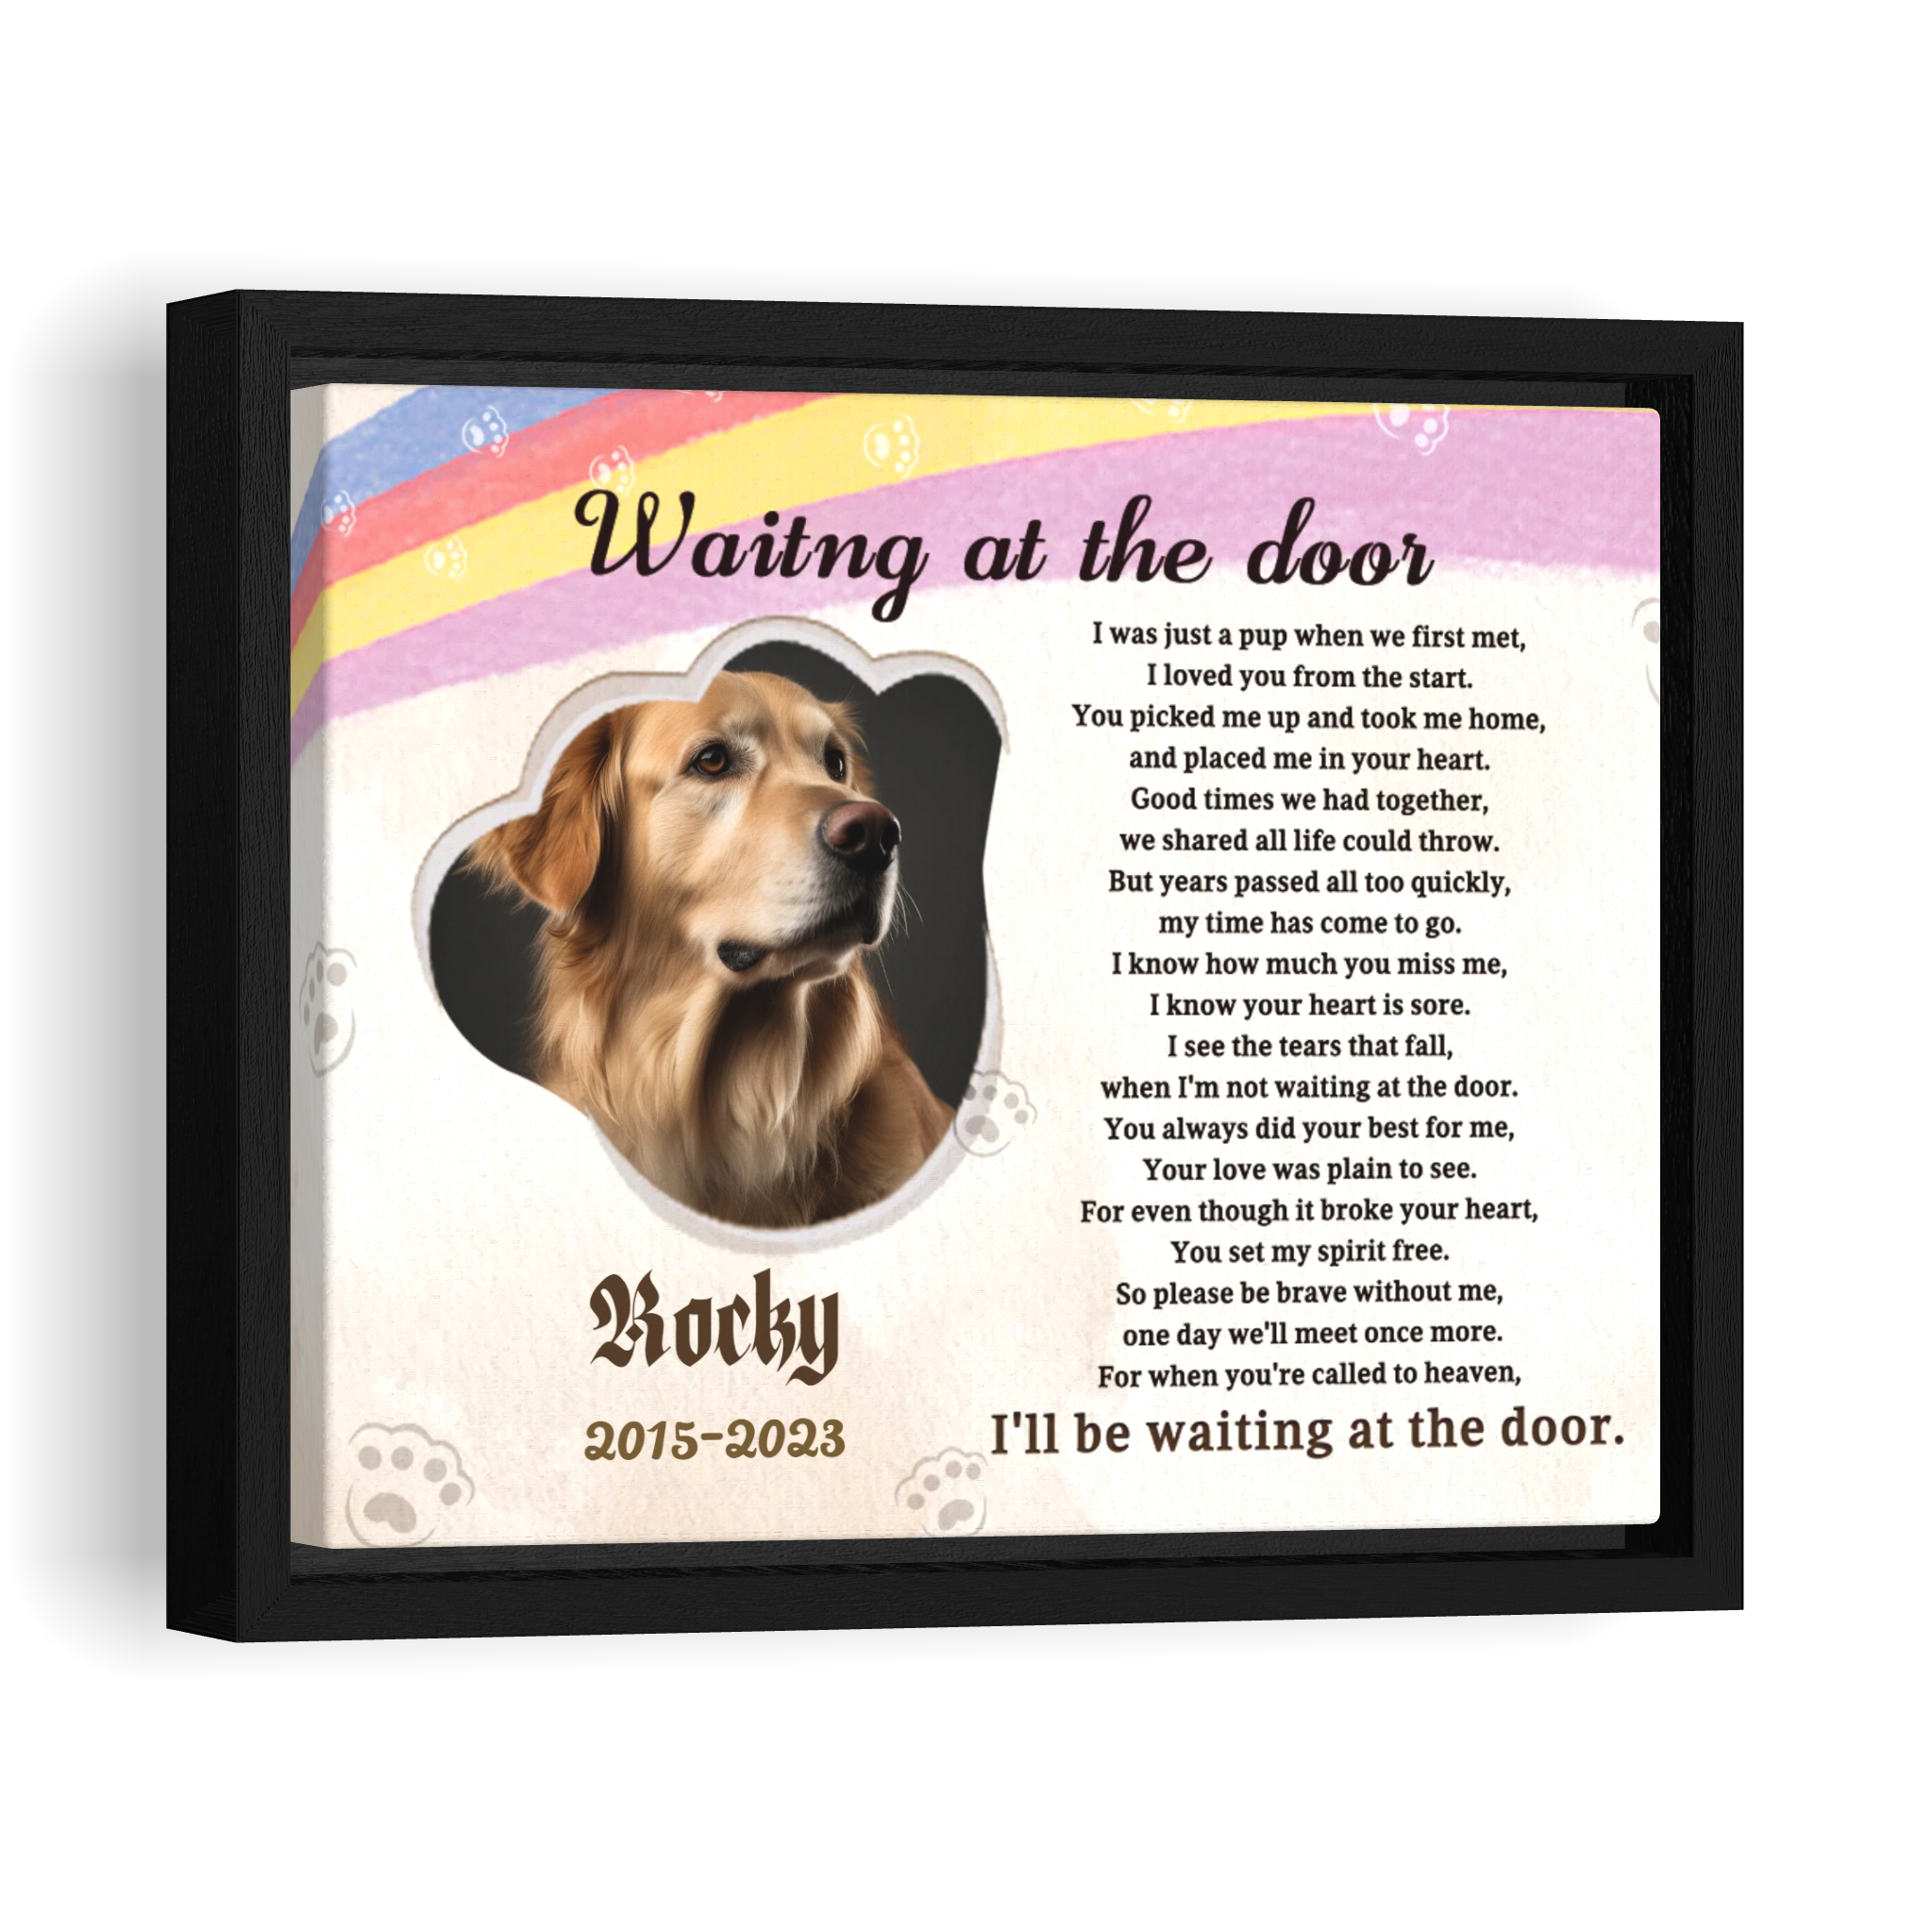 Waiting at the door - Personalized Canvas Print Pet Memorial